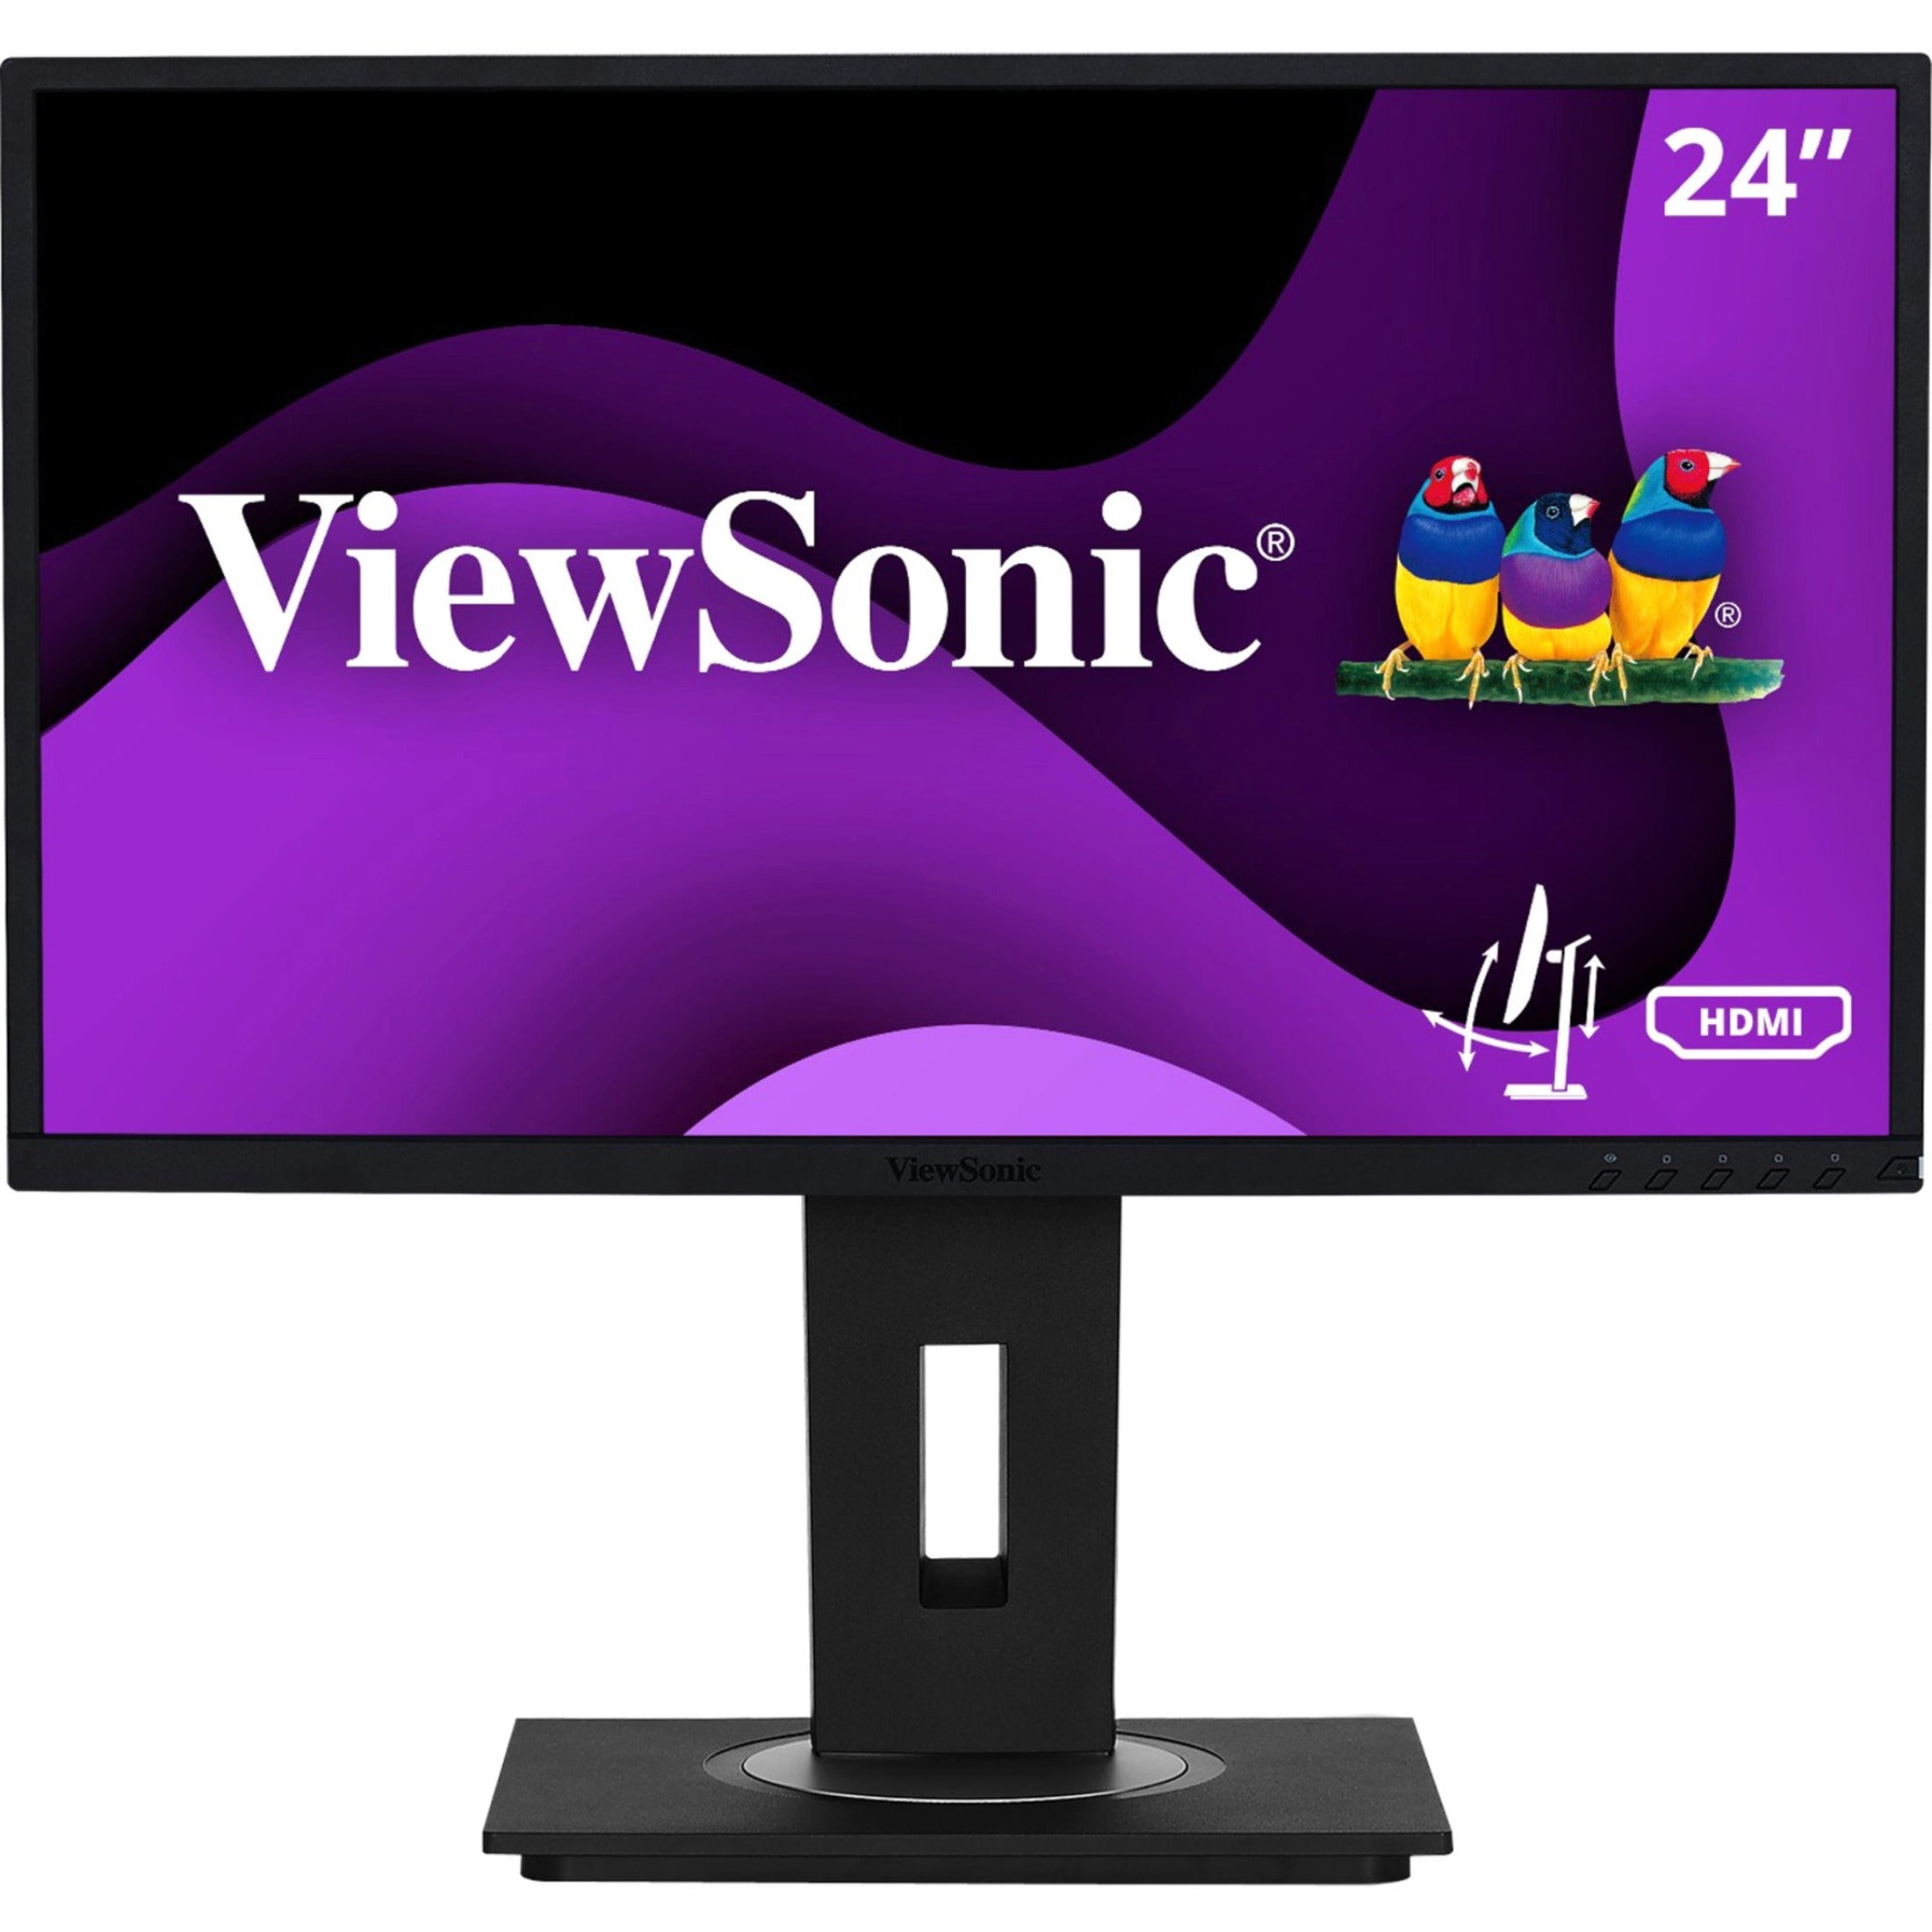 ViewSonic VG2448 Widescreen LCD Monitor, Full HD, 24, VGA HDMI DisplayPort, USB Hub, 3 Year Warranty